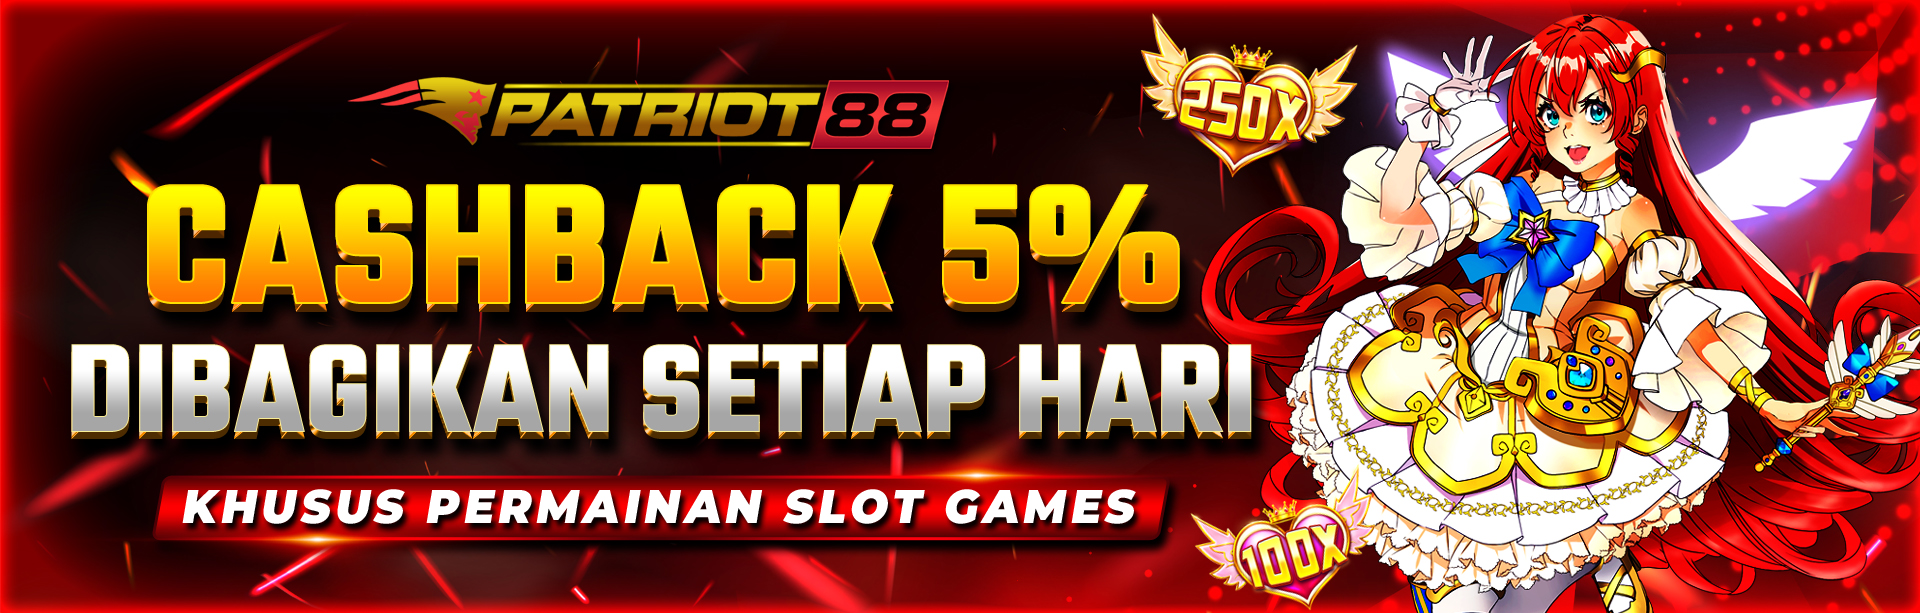 BONUS CASHBACK 5% SLOT GAMES DI PATRIOT88